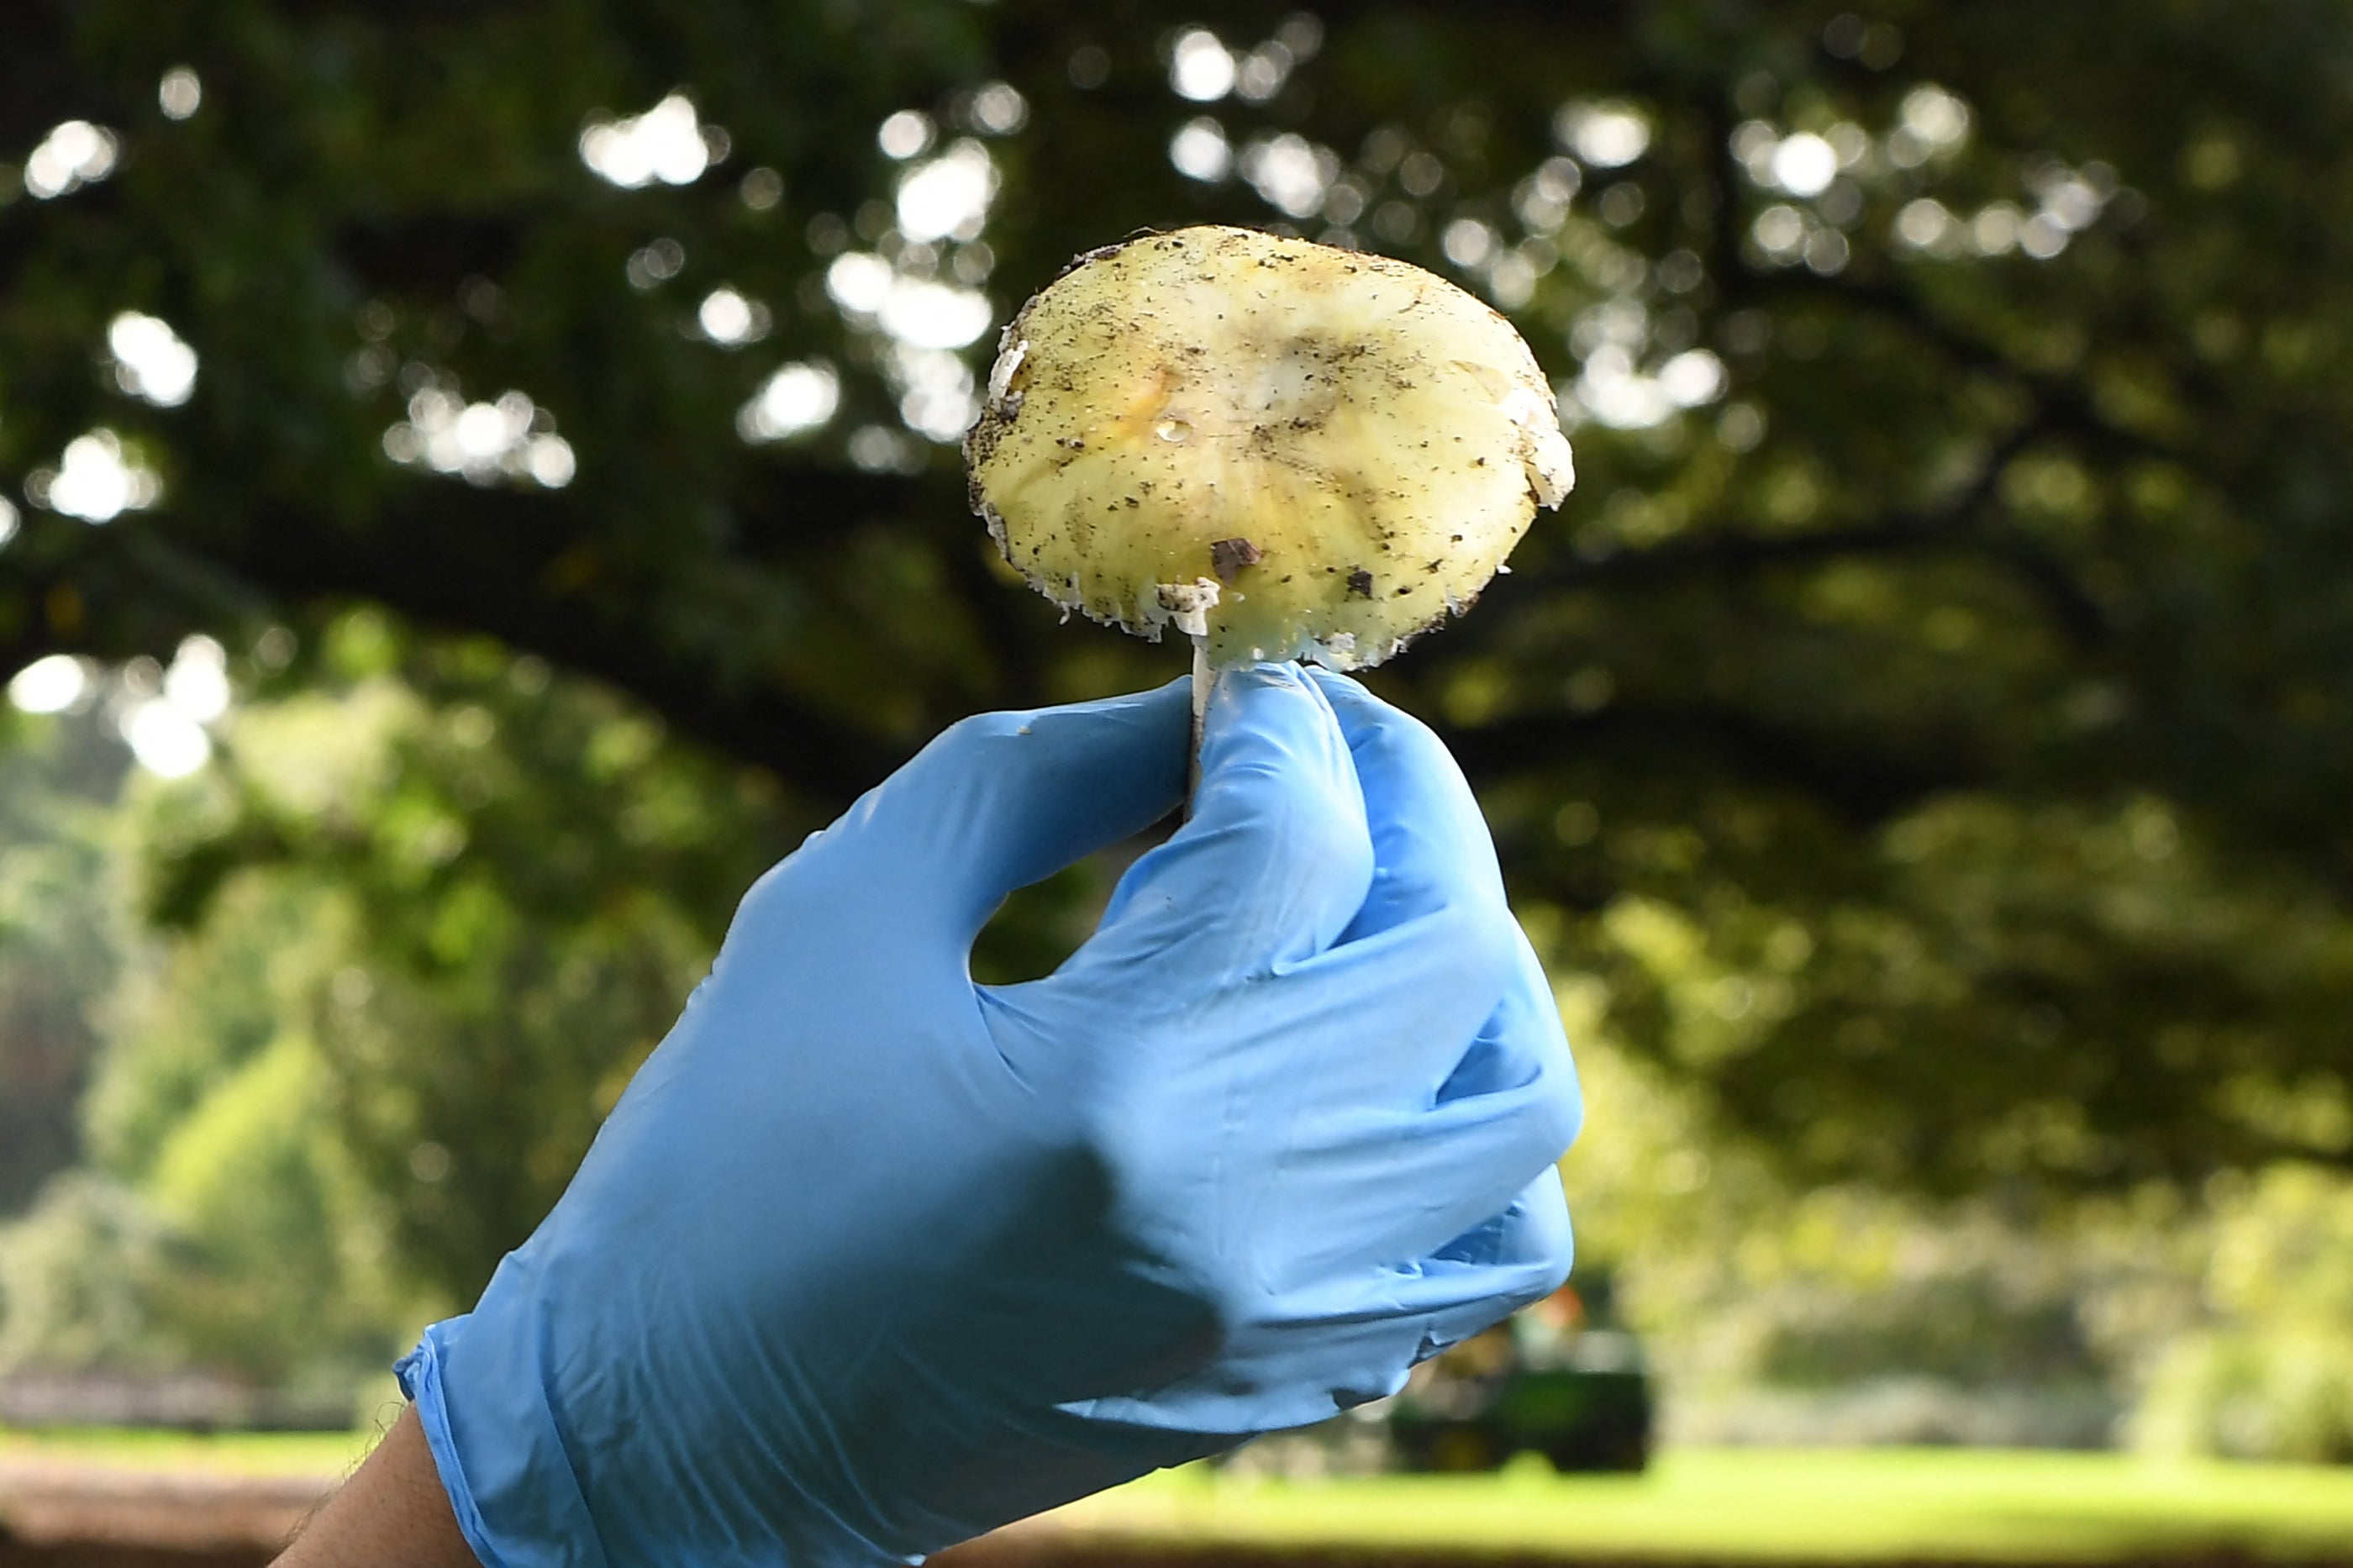 Death Cap mushrooms have no known antidote